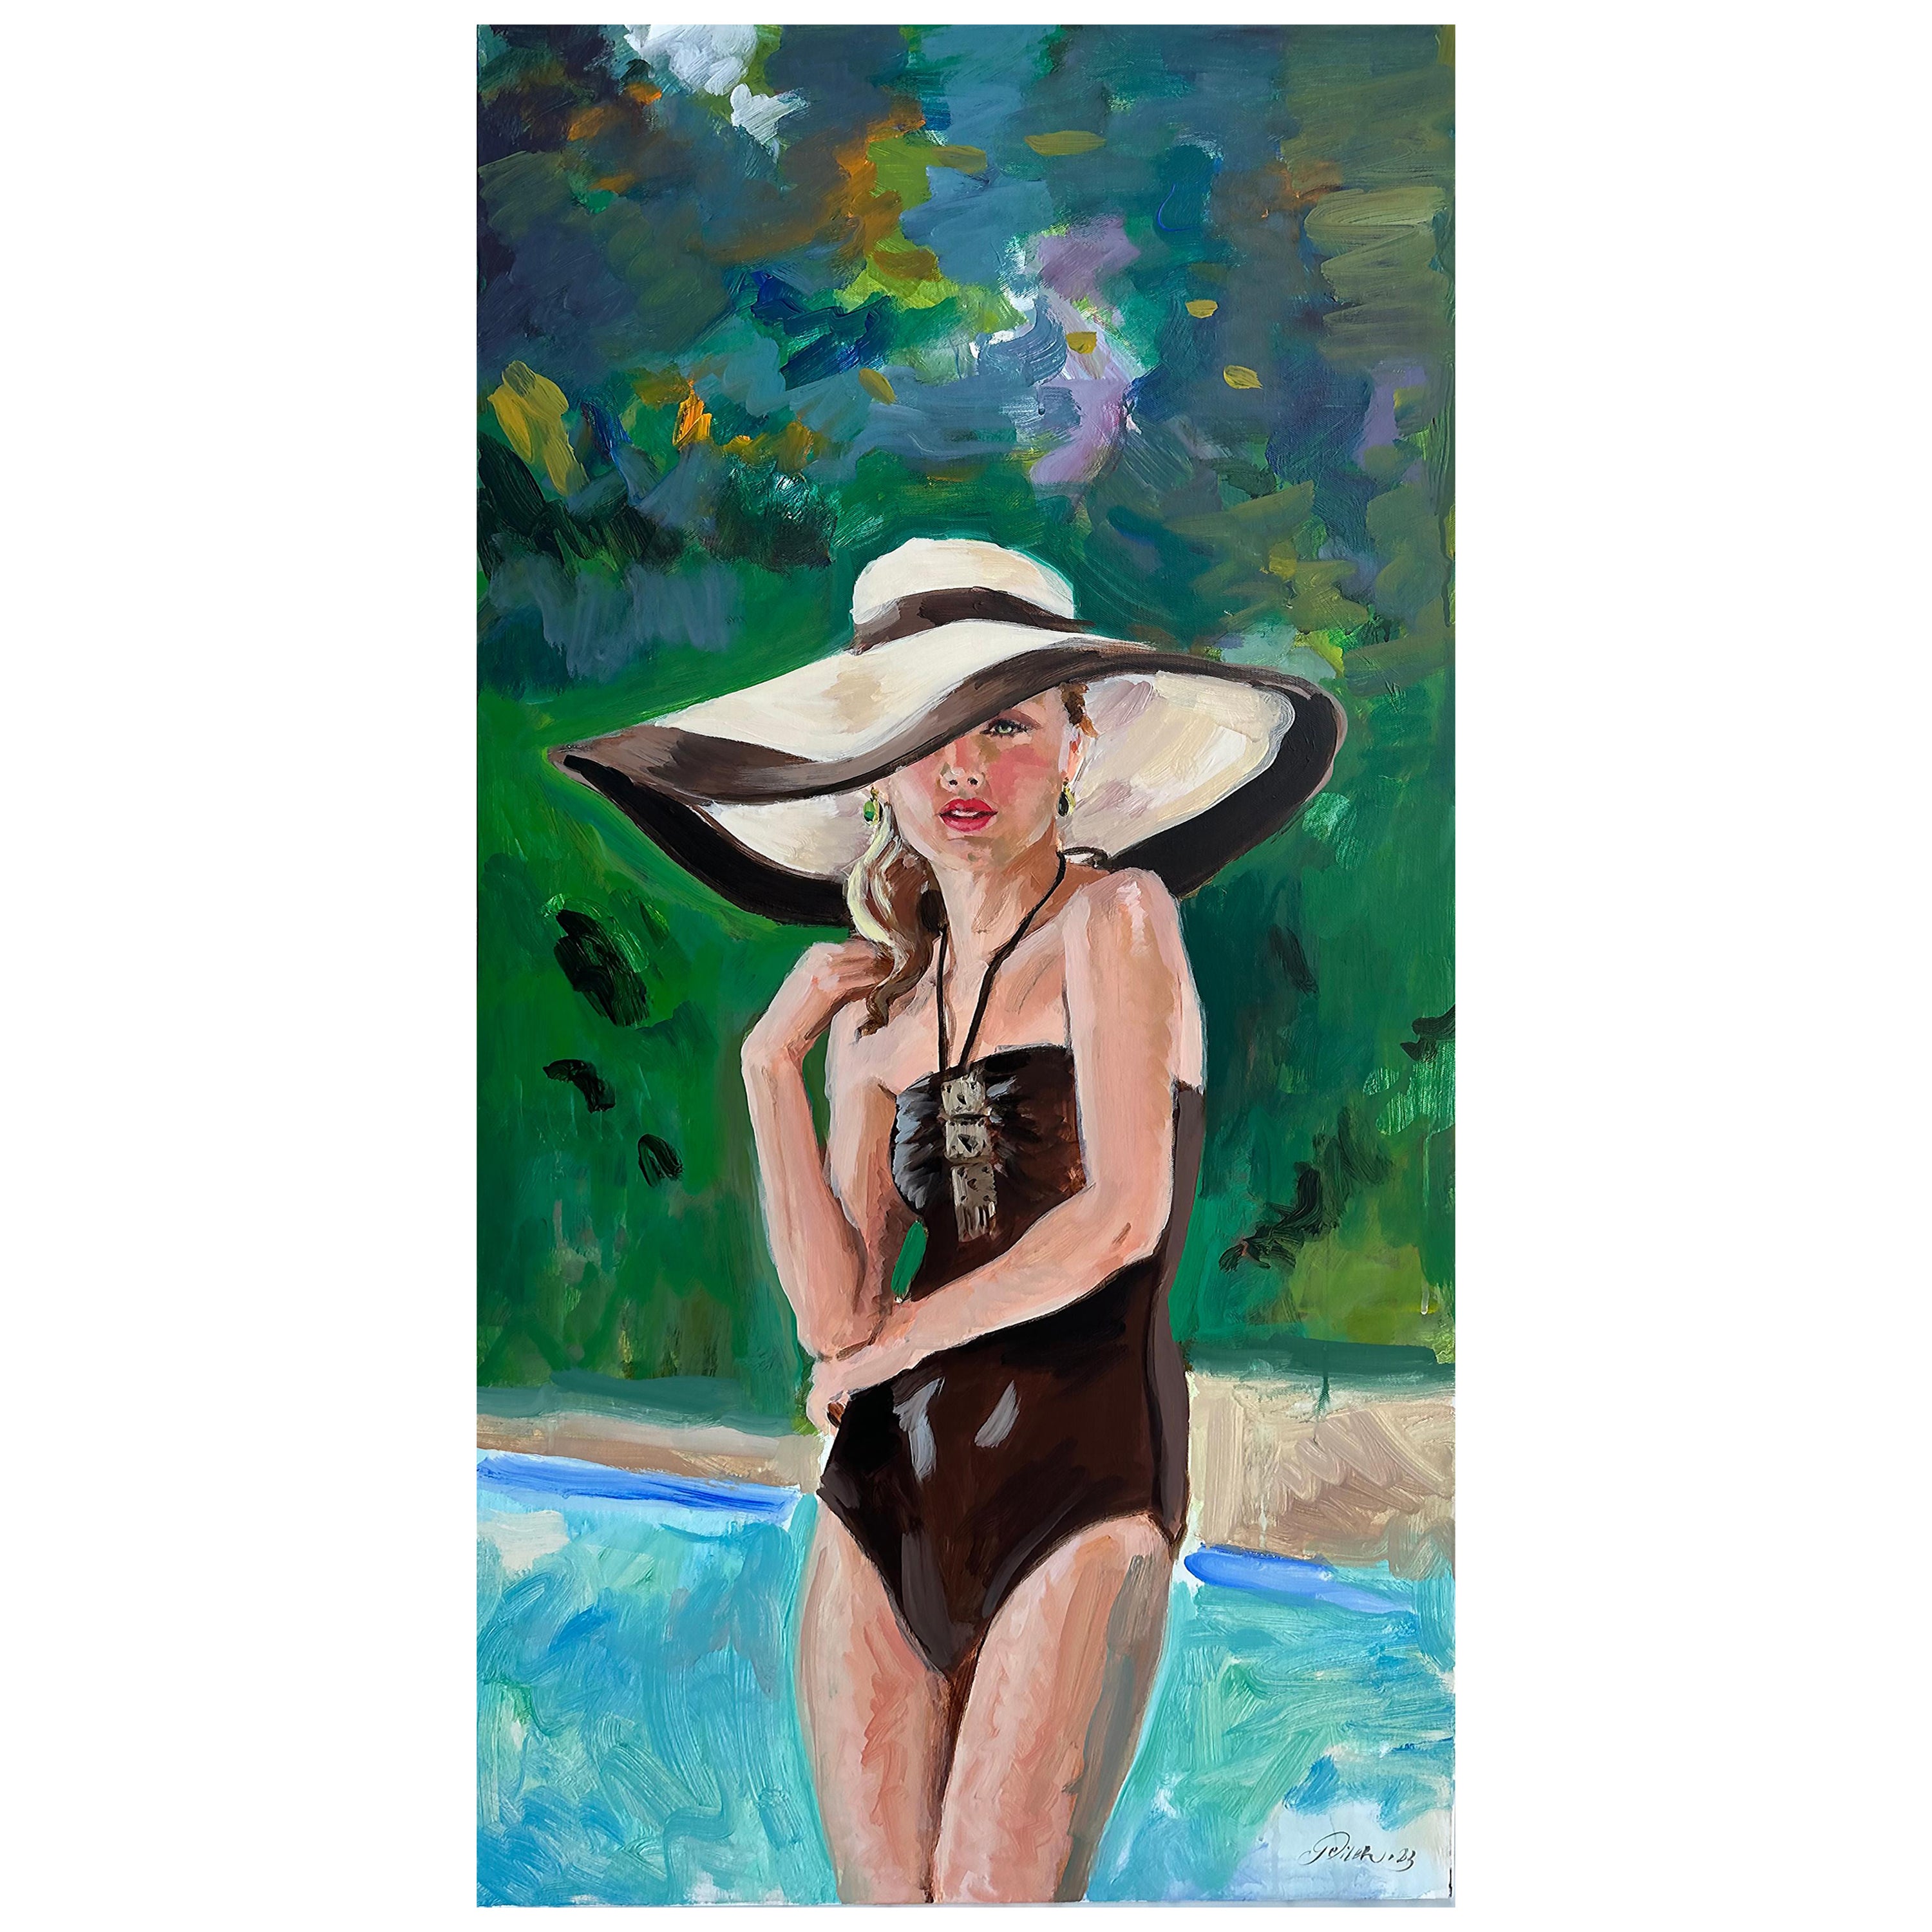 Cuban American Artist Geiler Gonzalez Painting "Woman with Hat" For Sale